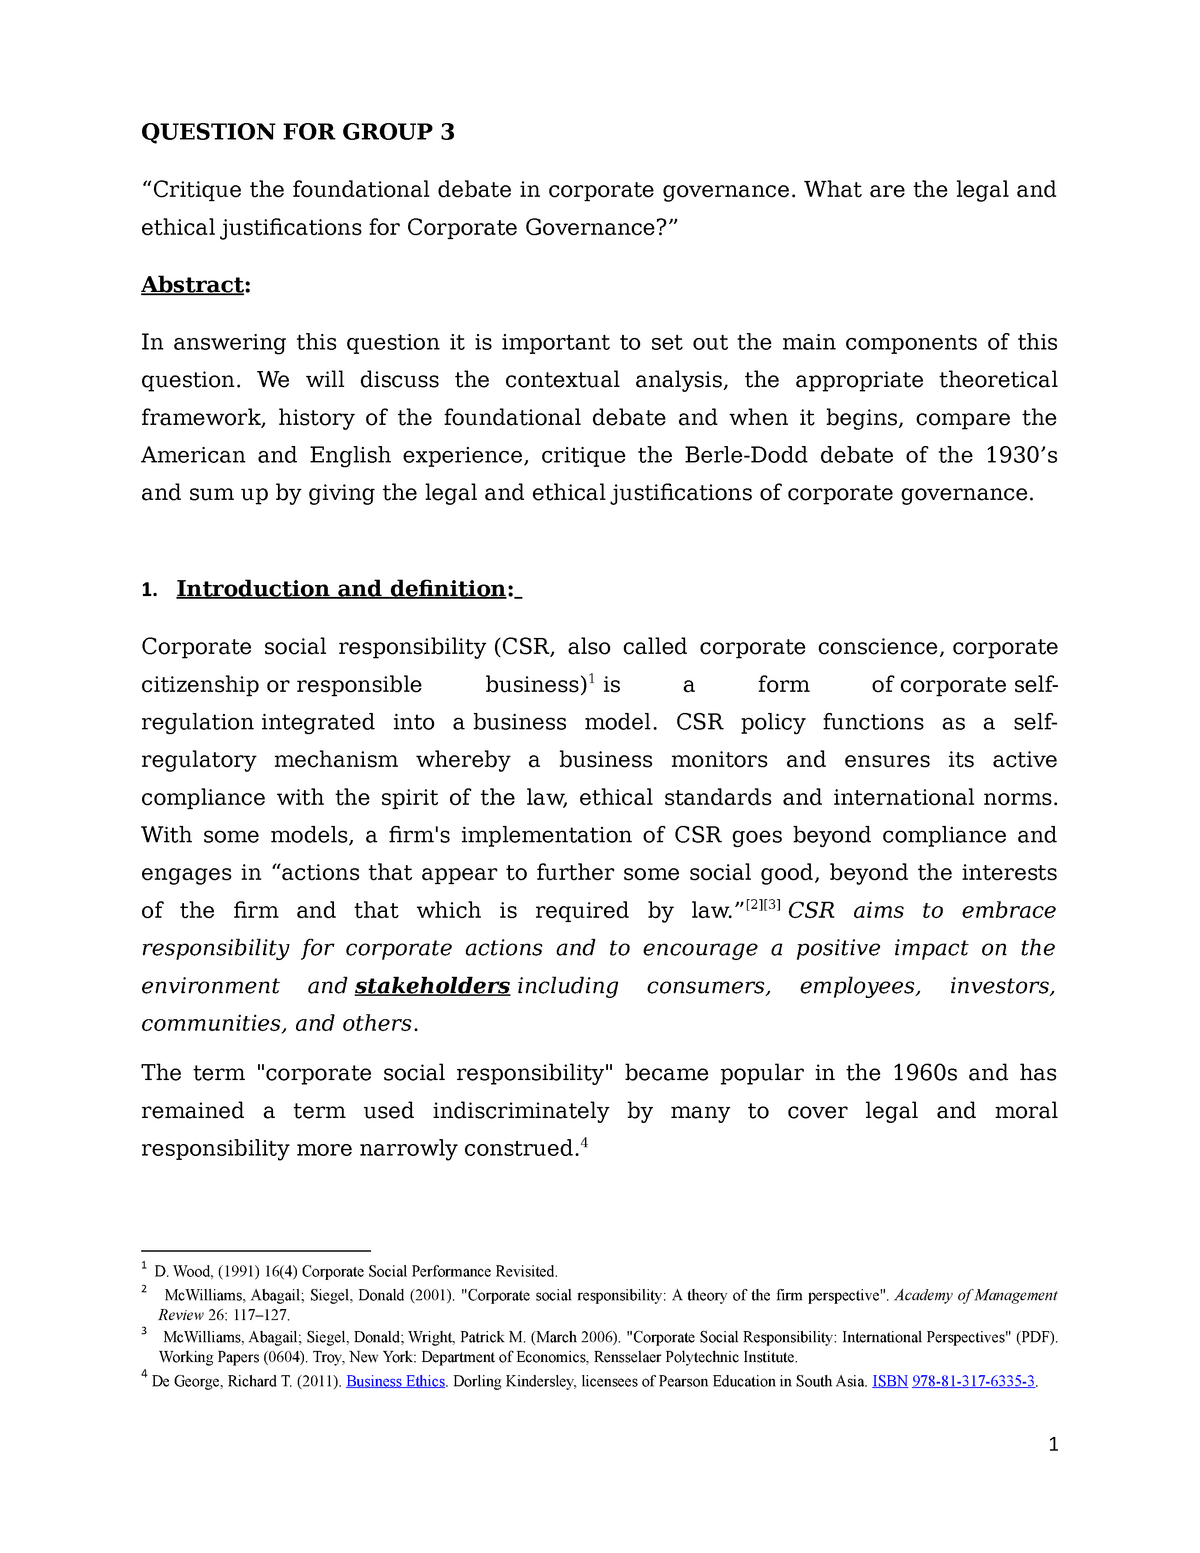 llm dissertation on corporate governance